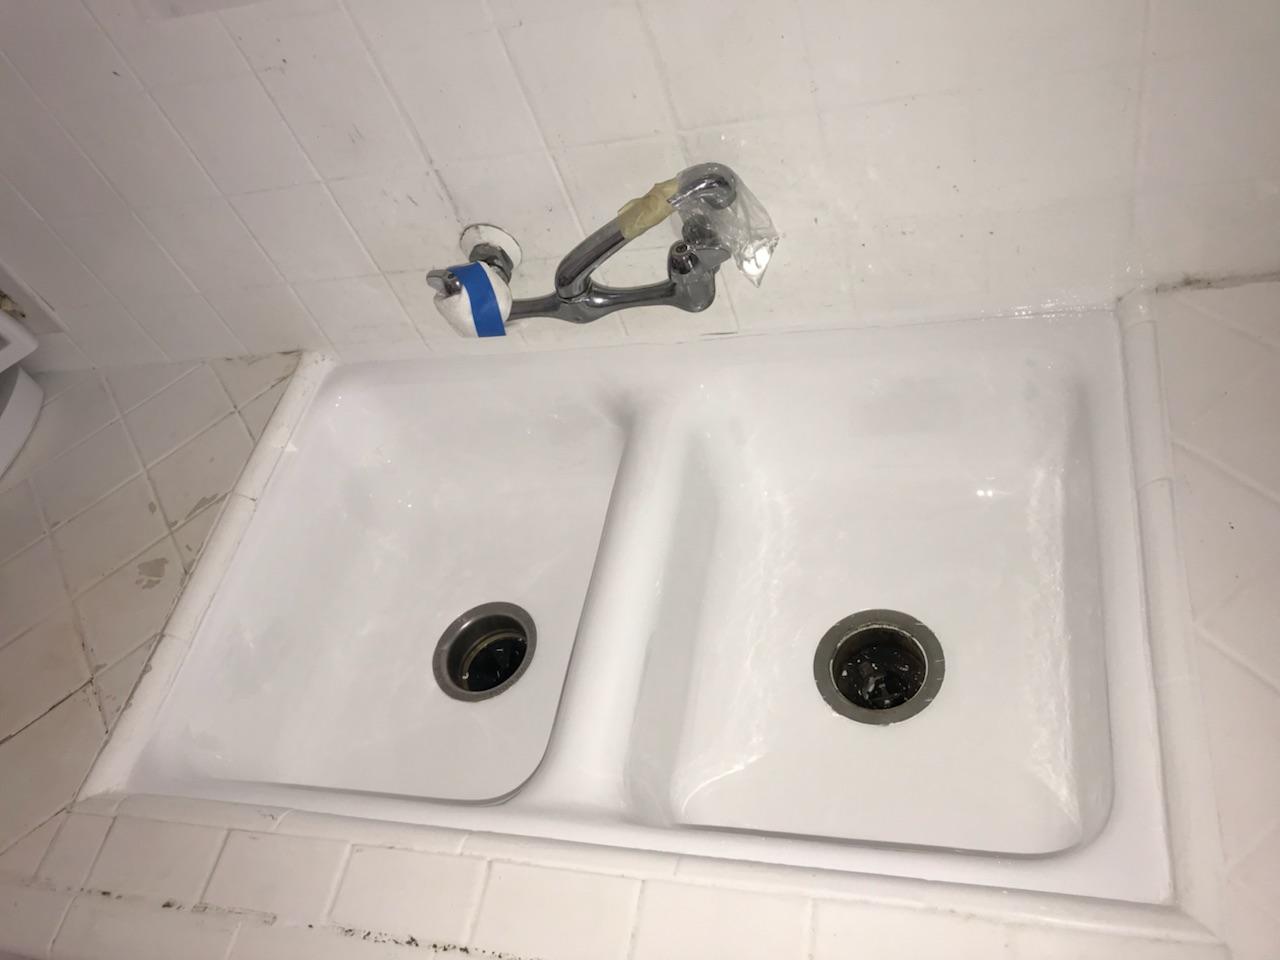 Double Bowl Kitchen Sink After Refinishing | Mission Hills, CA | Julian's Porcelain & Fiberglass Expert